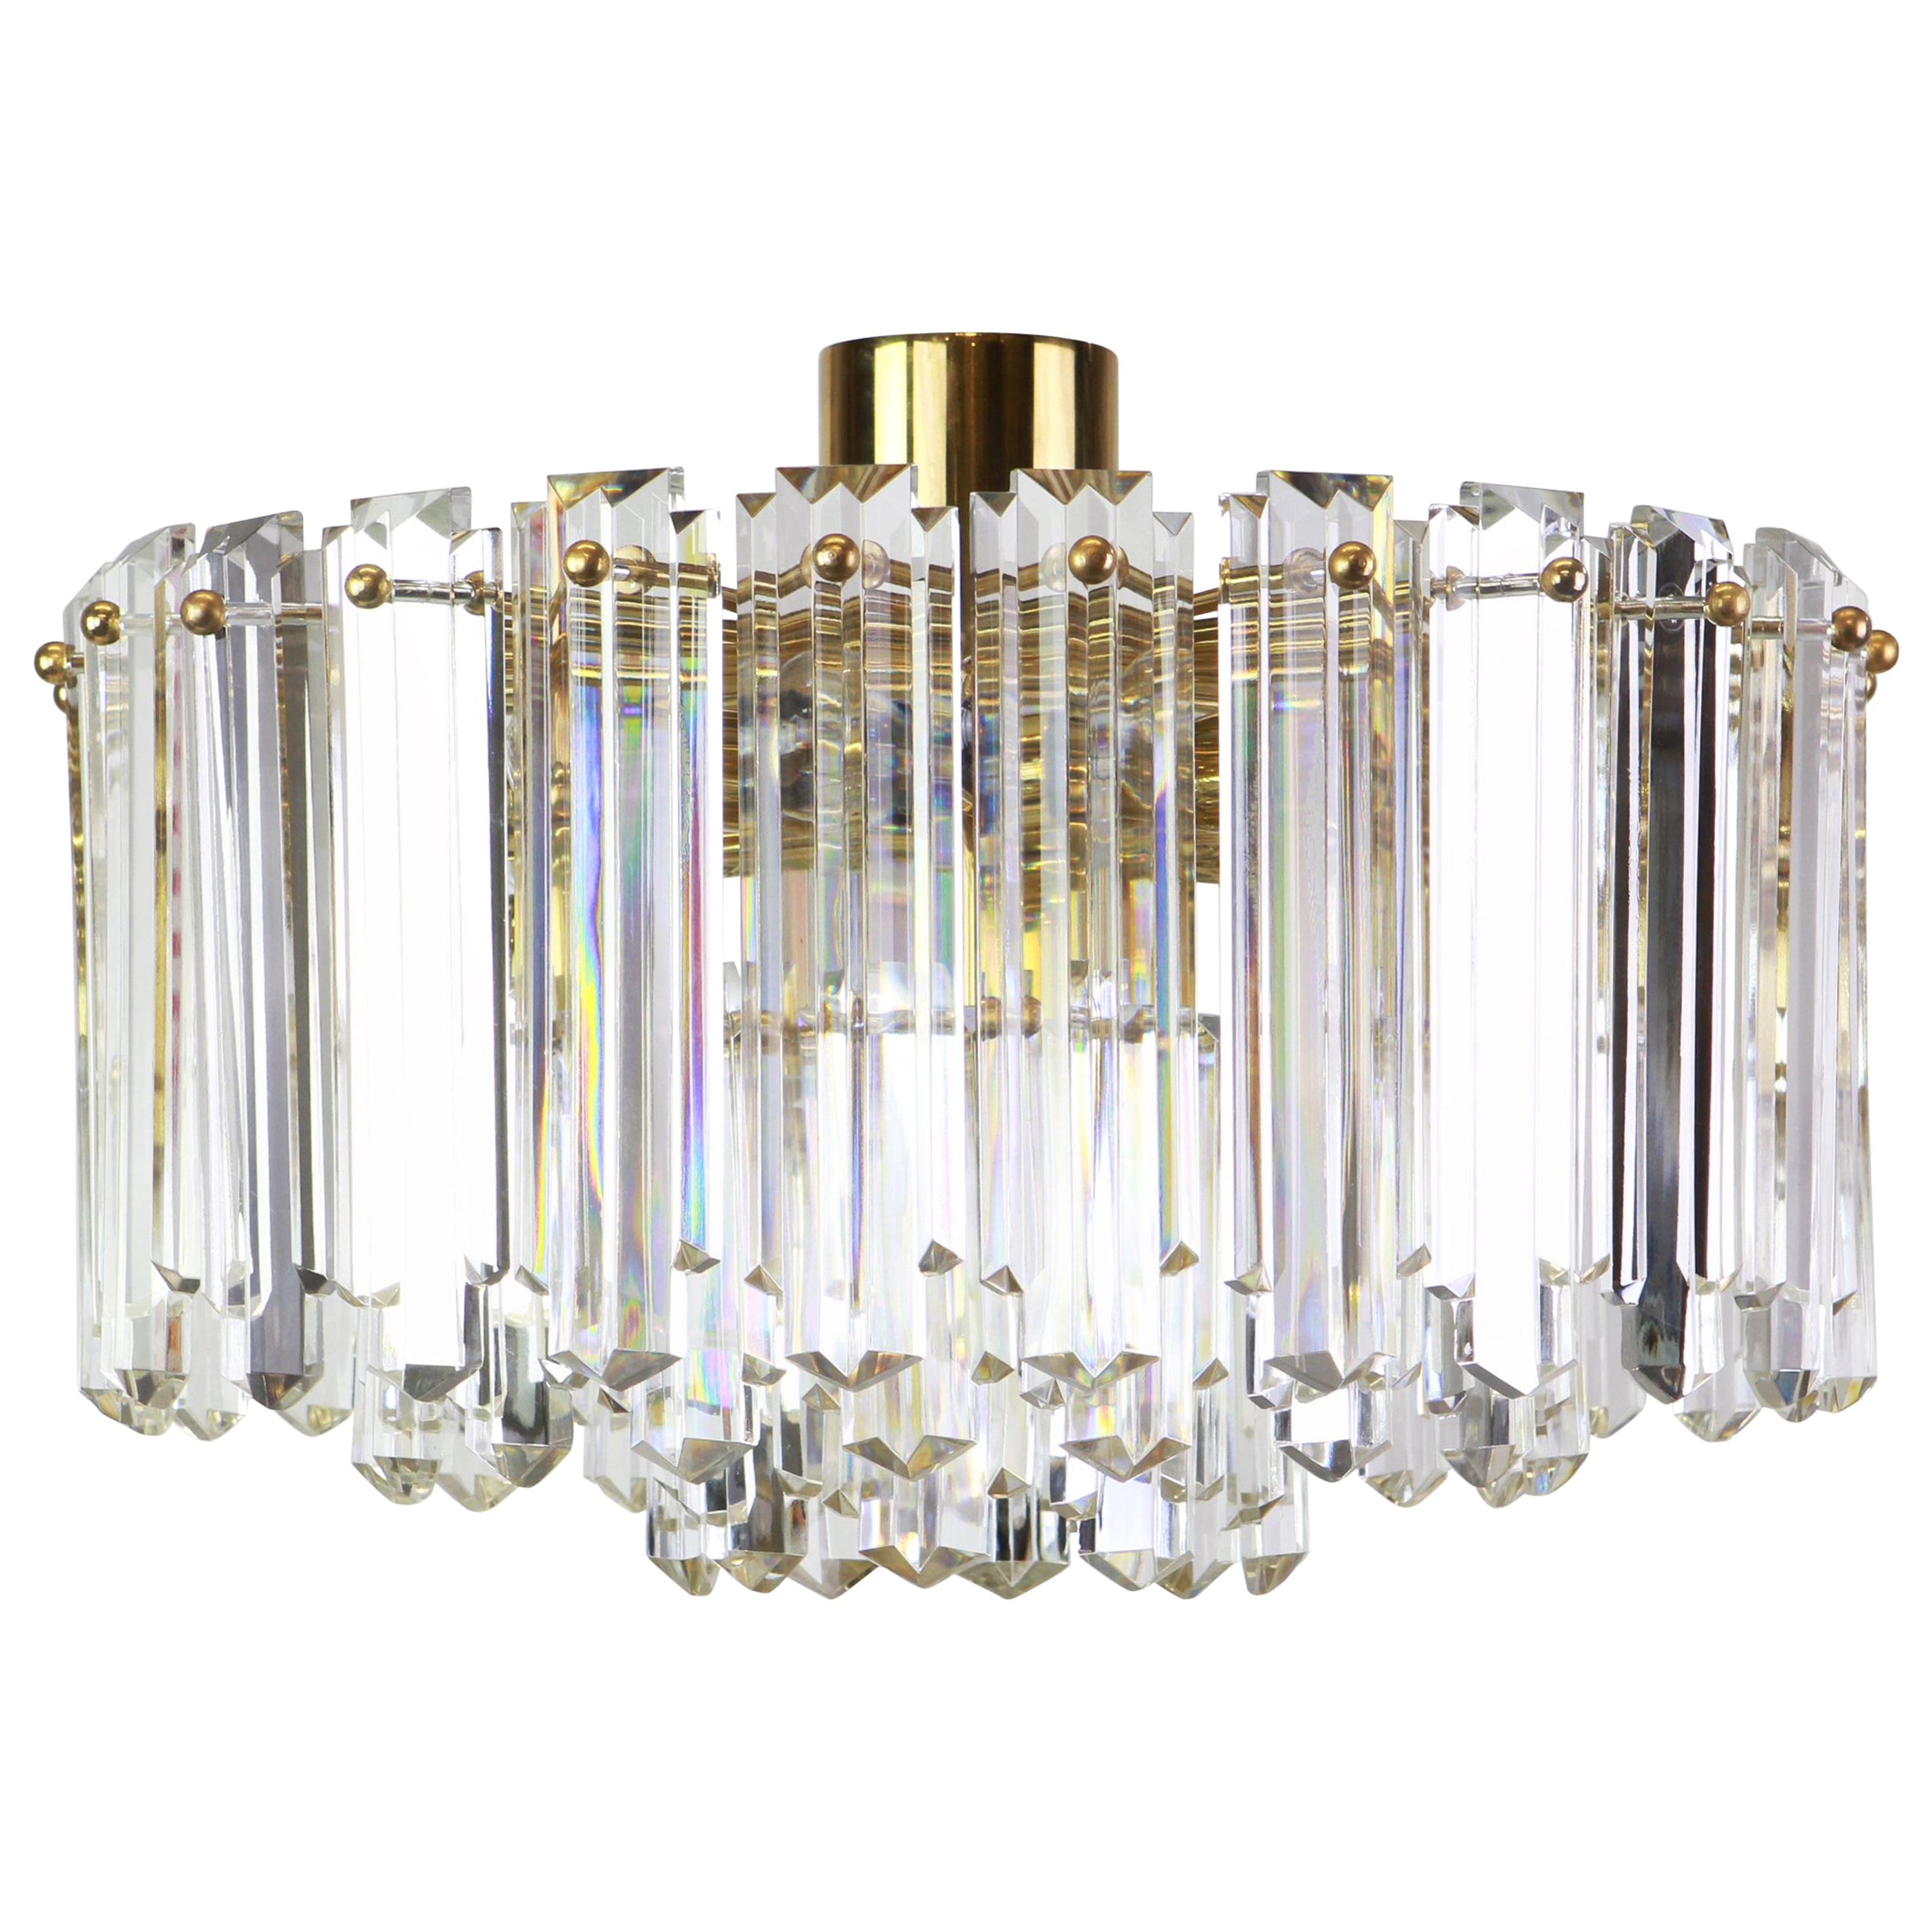 1 of 2 Stunning Brass, Crystal Glass Light Fixture Floria, Kalmar, Austria, 1970 For Sale